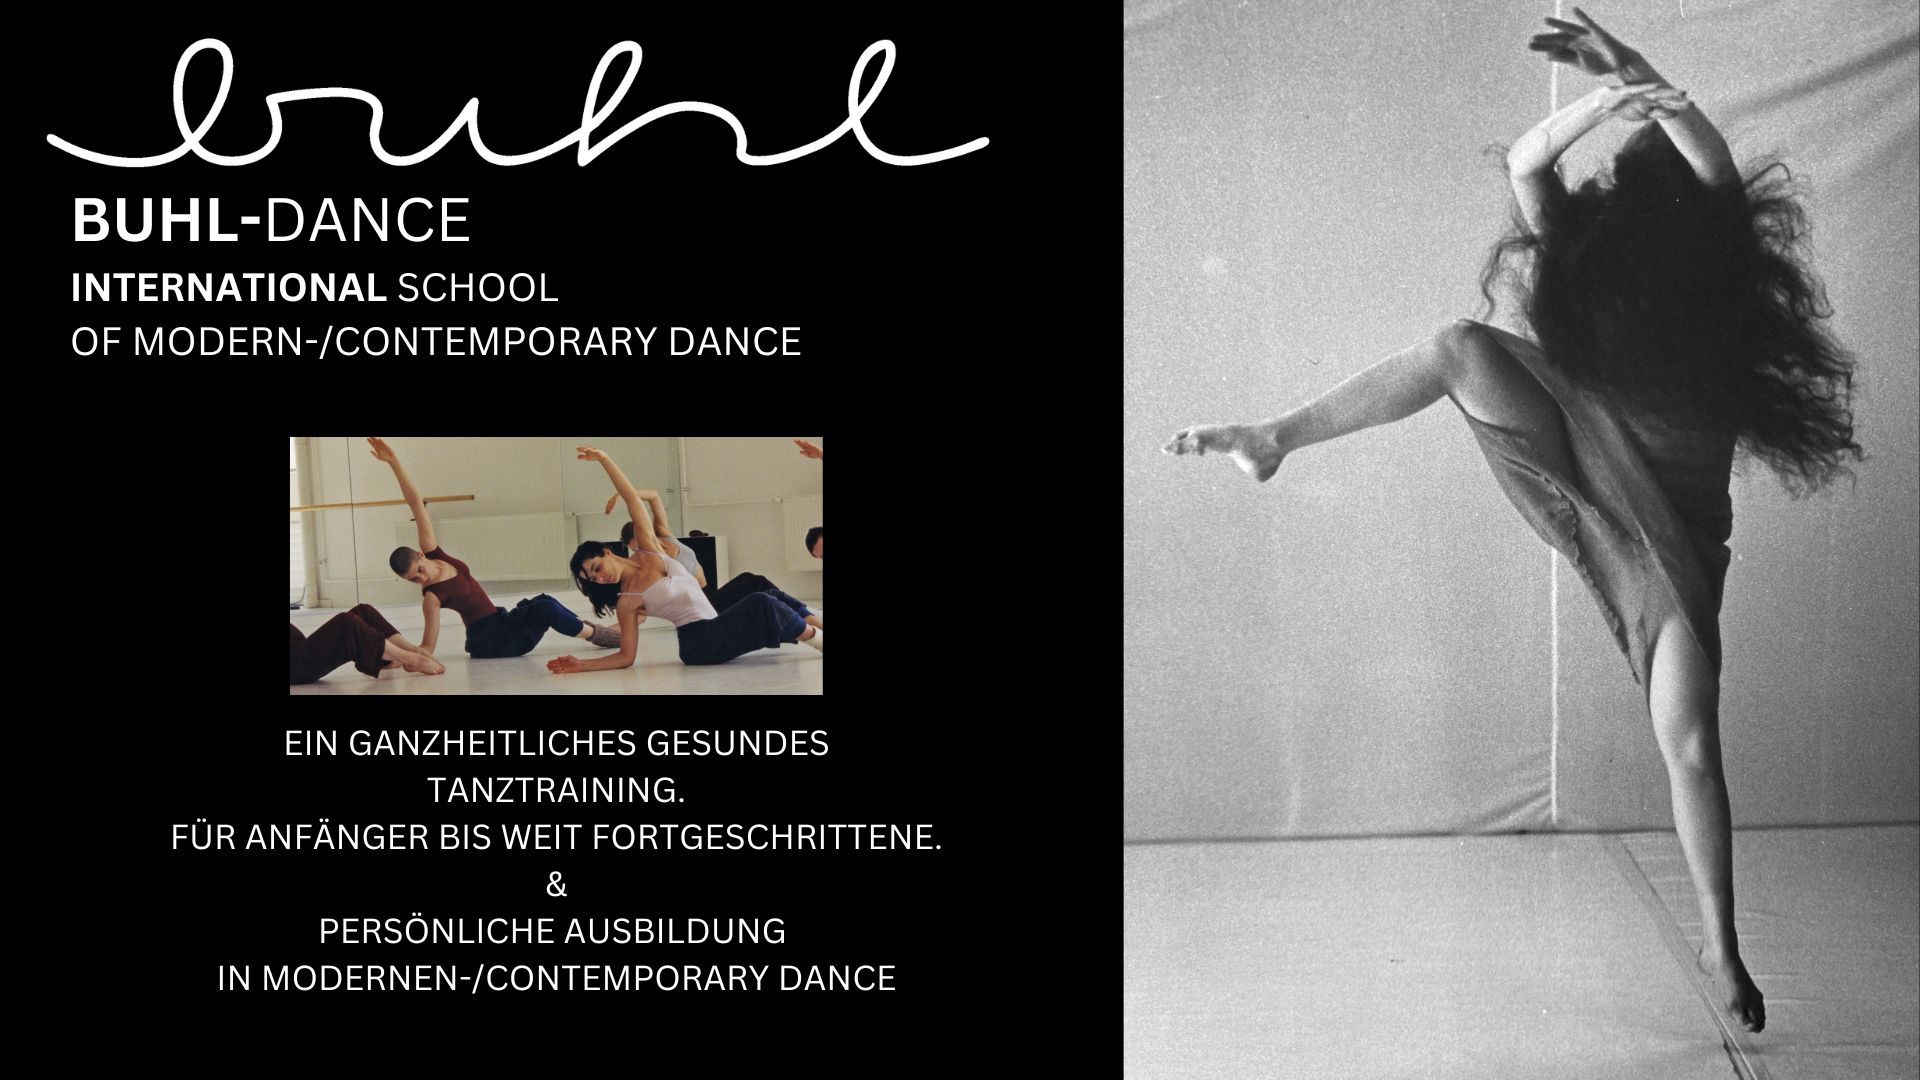 BUHL-DANCE INTERNATIONAL SCHOOL OF MODERN-/ CONTEMPORARY DANCE